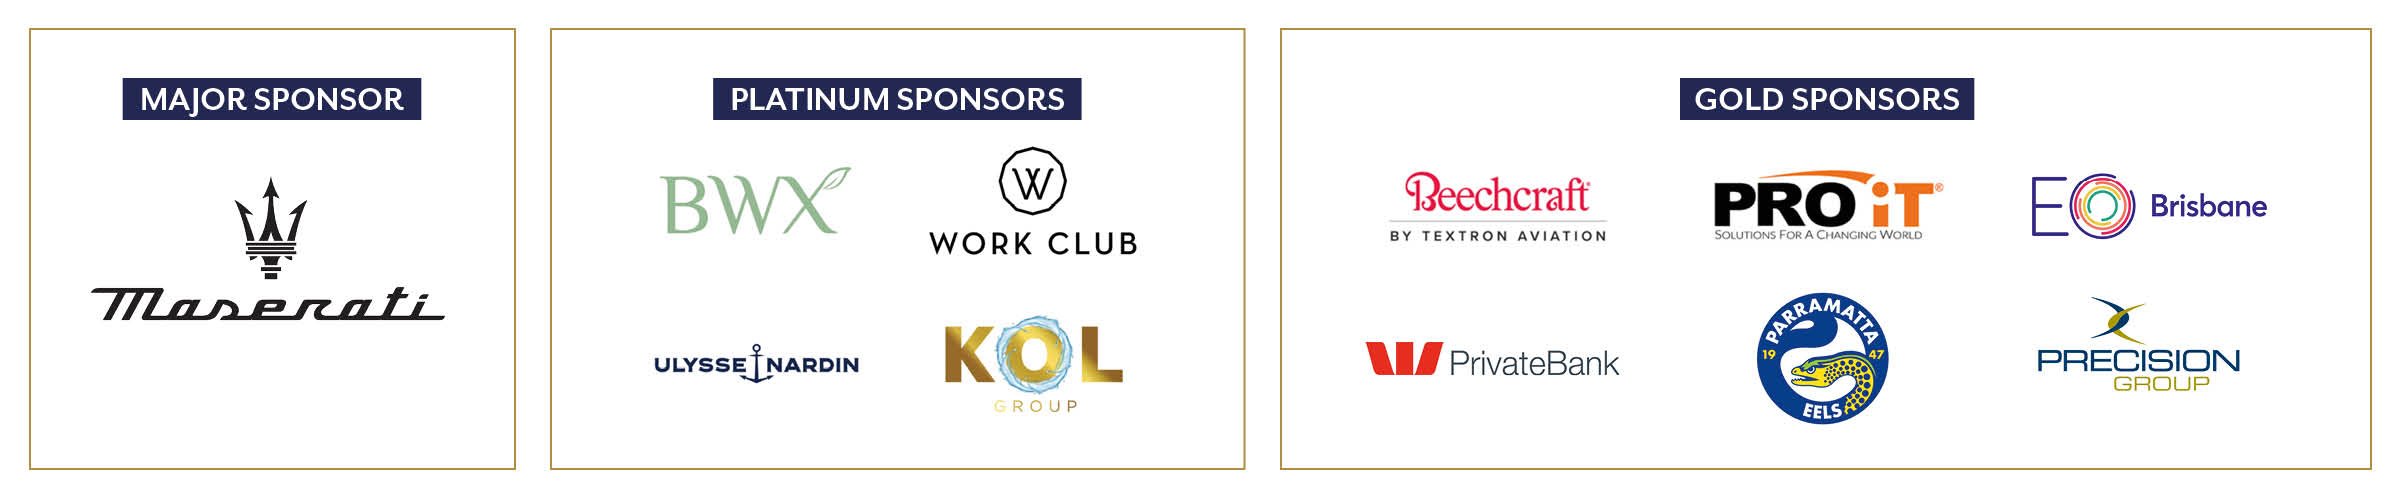 Executive of the Year Awards sponsorships